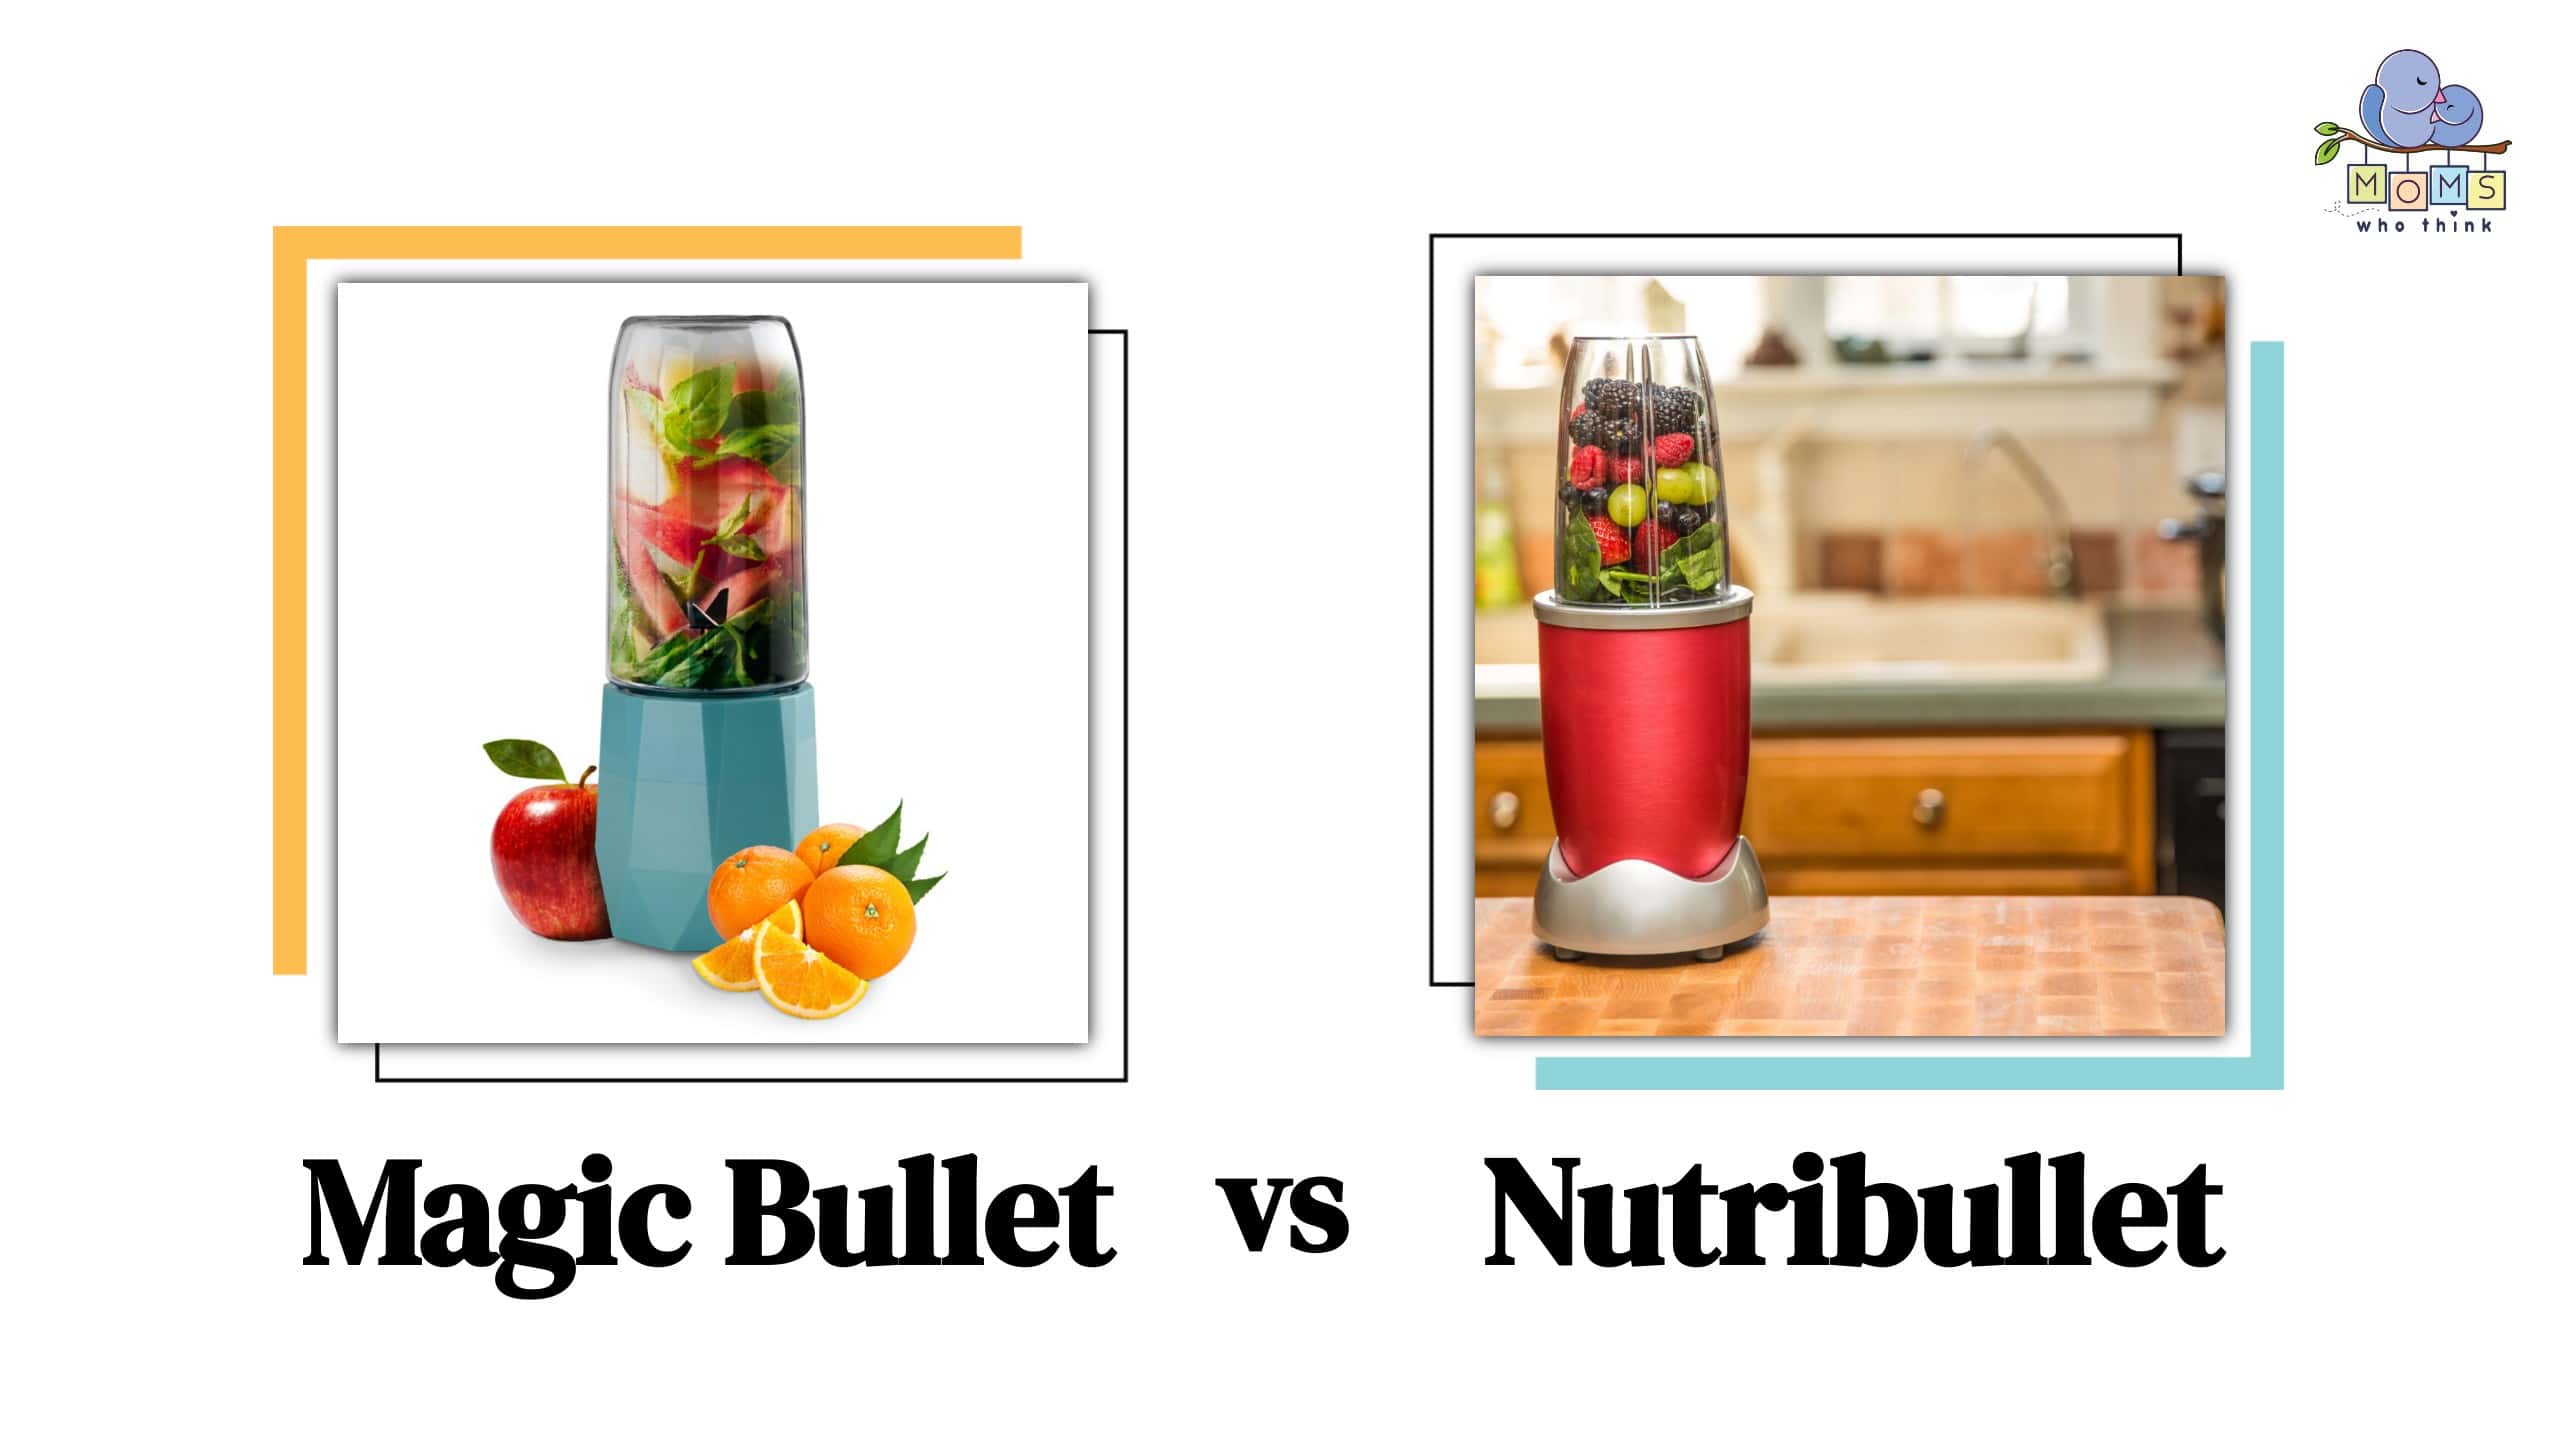 Nutribullet Magic Bullet - 3-Piece - Save 25%